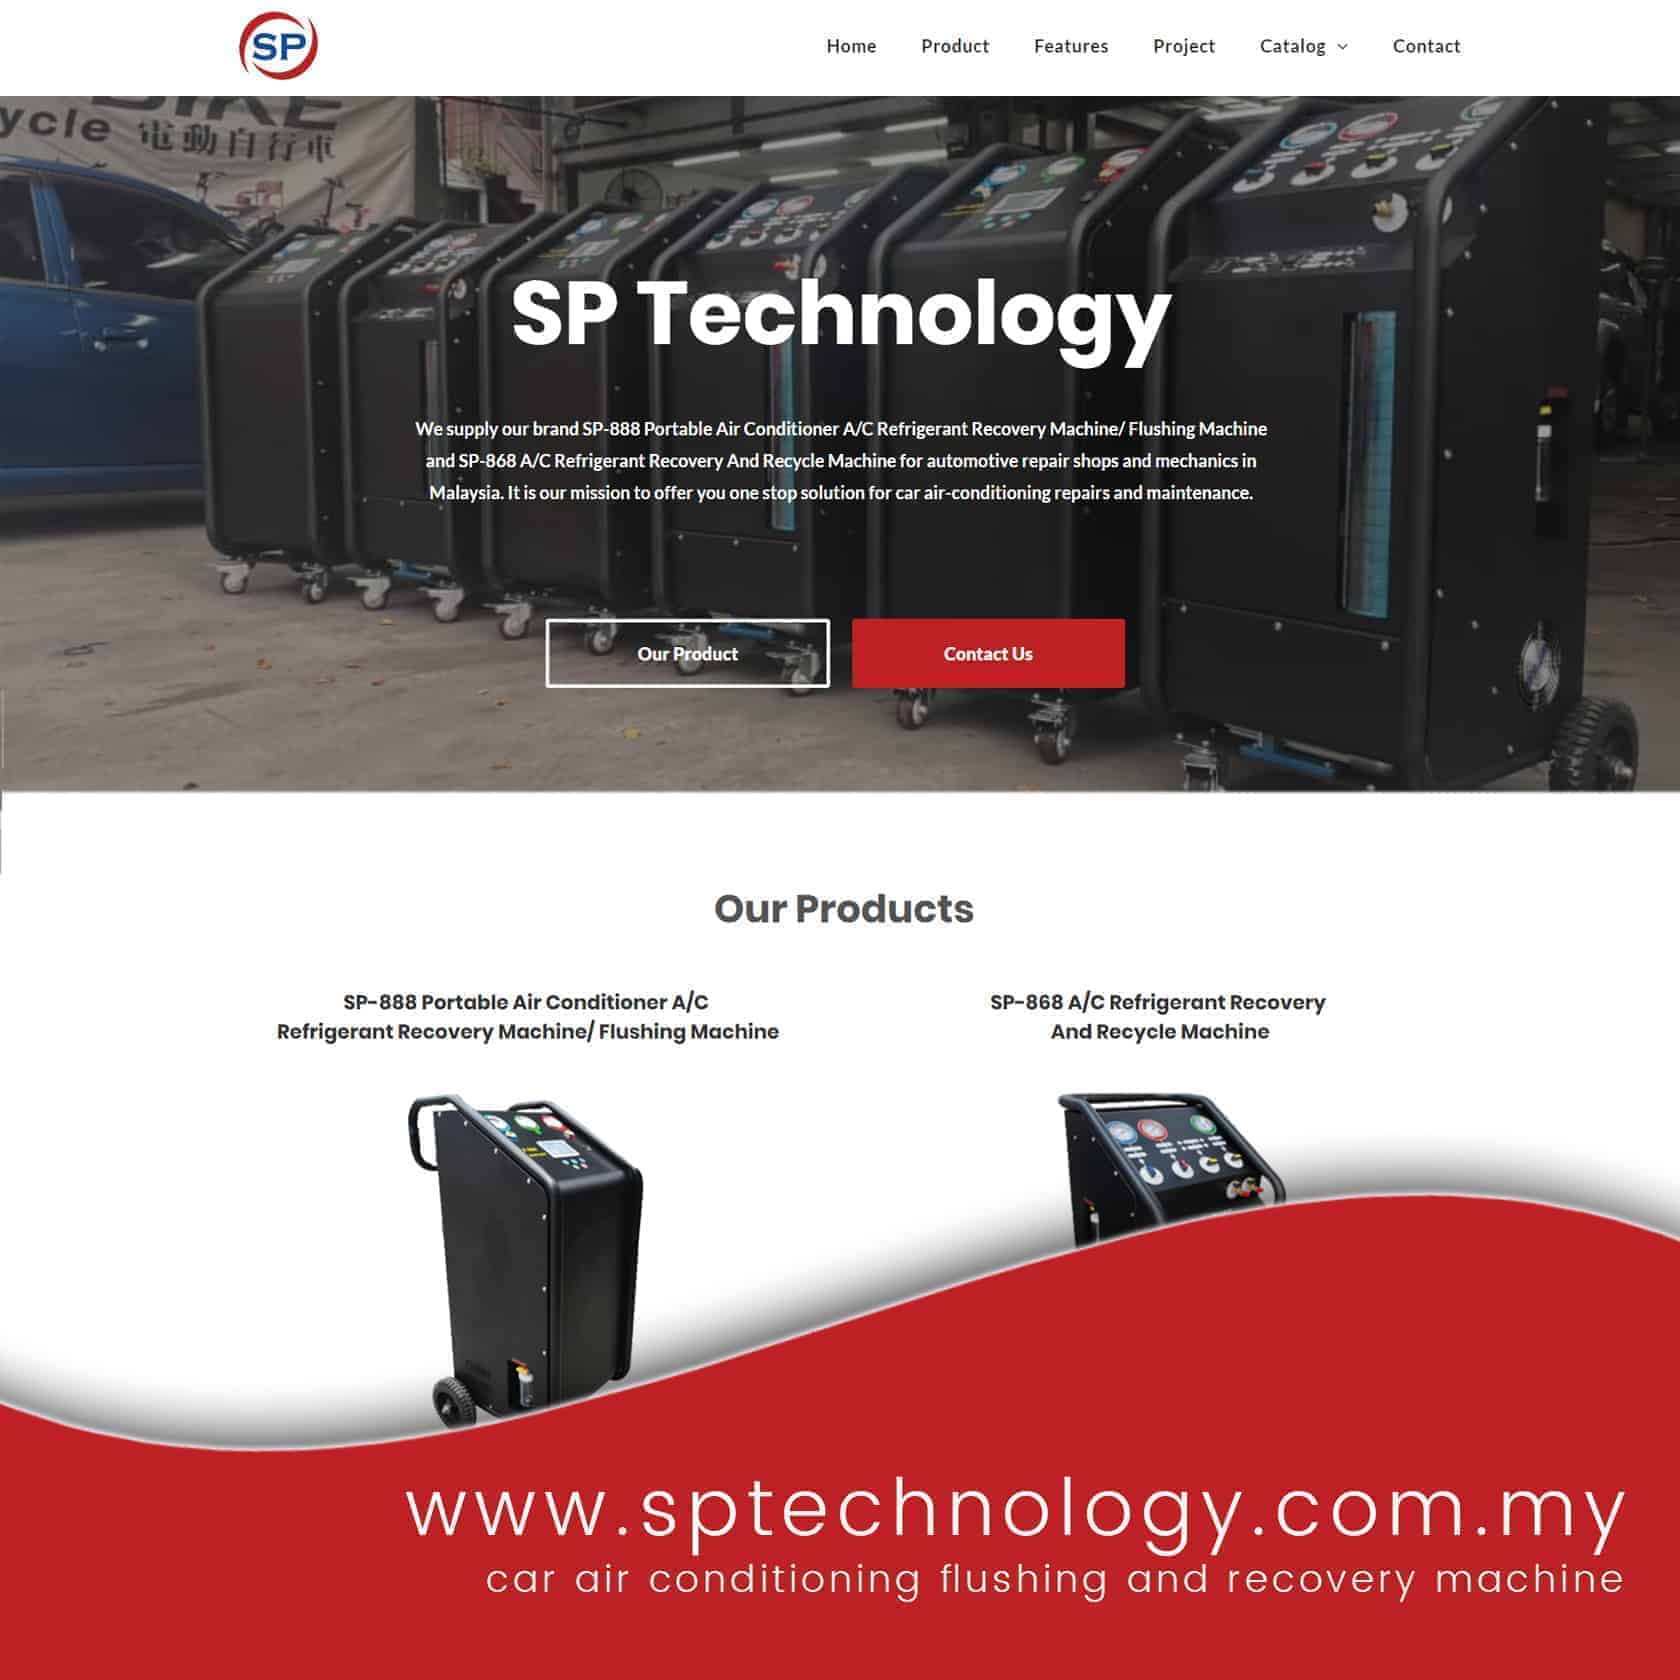 sptechnology website